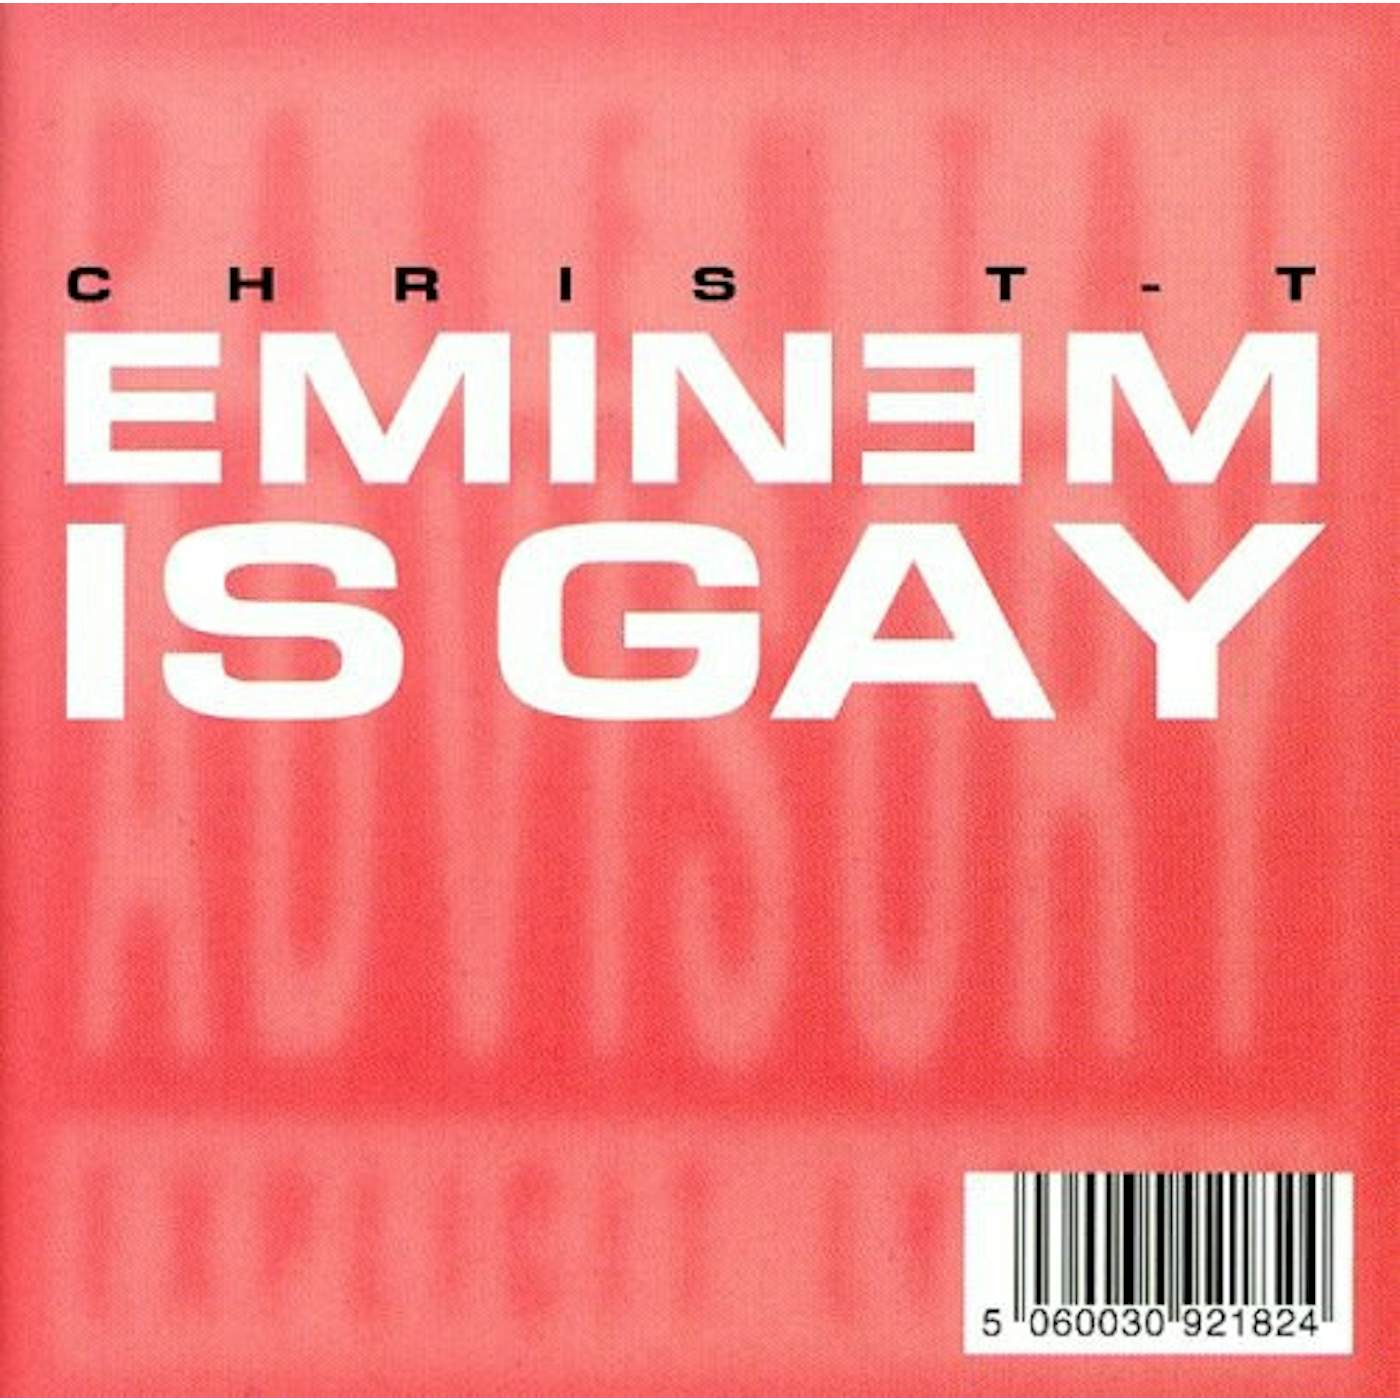 Chris T T-HEADCOLD BIT OF THEWINTER/EMINEM IS GAY Vinyl Record